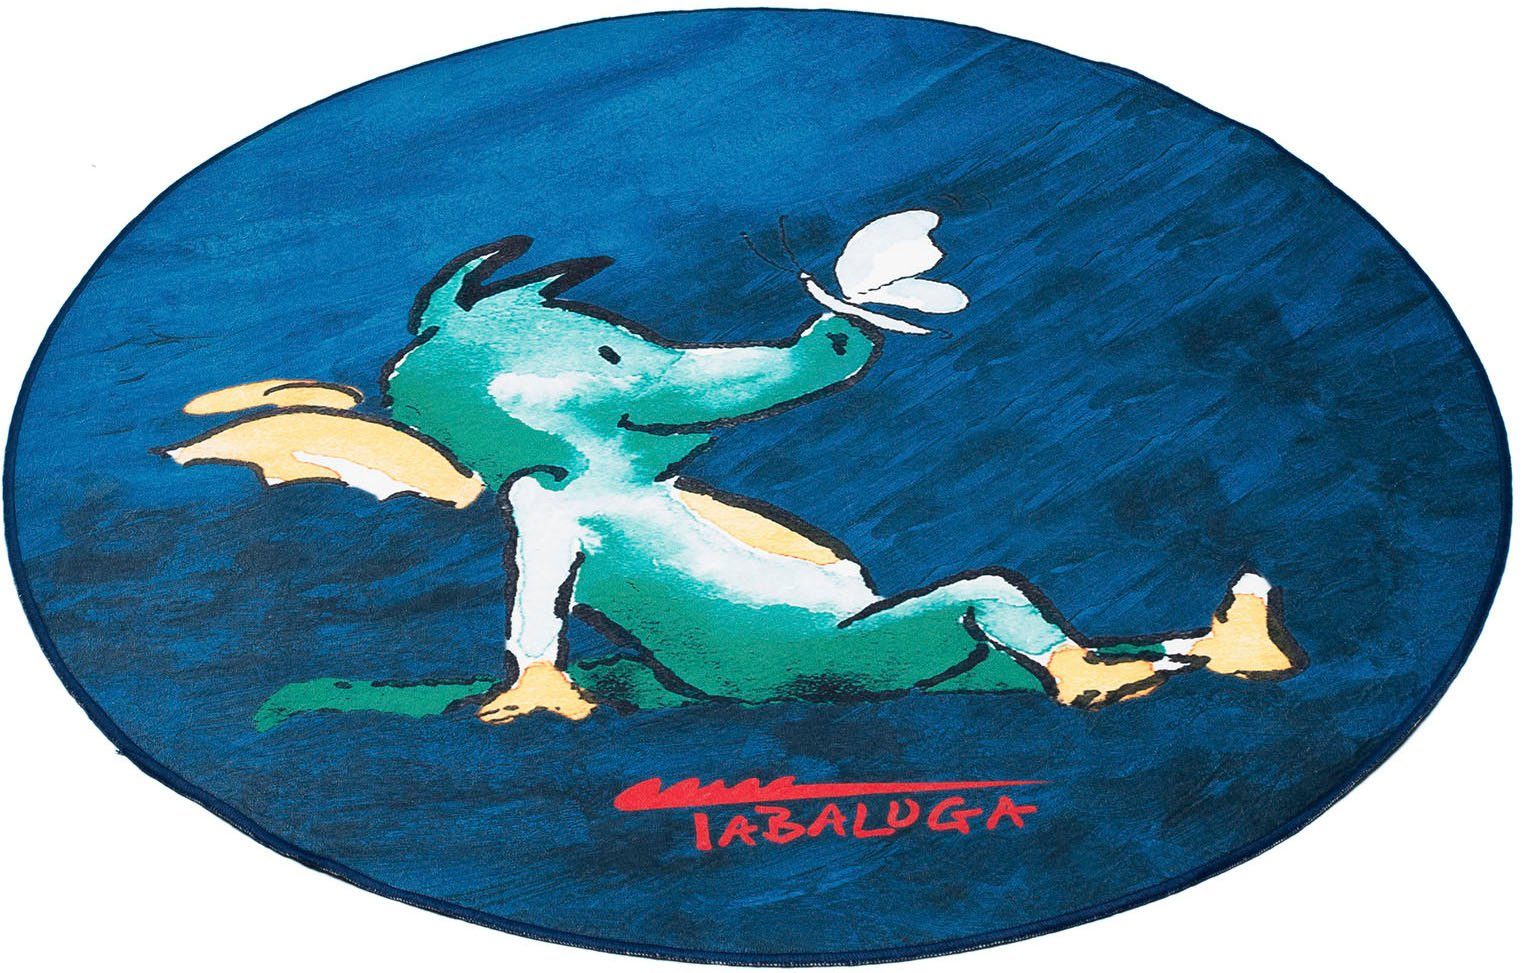 Kinderteppich »Drache Tabaluga dunkelblau«, TABALUGA, rund, Höhe 4 mm, bedruckt, waschbar, Kinderzimmer-Otto